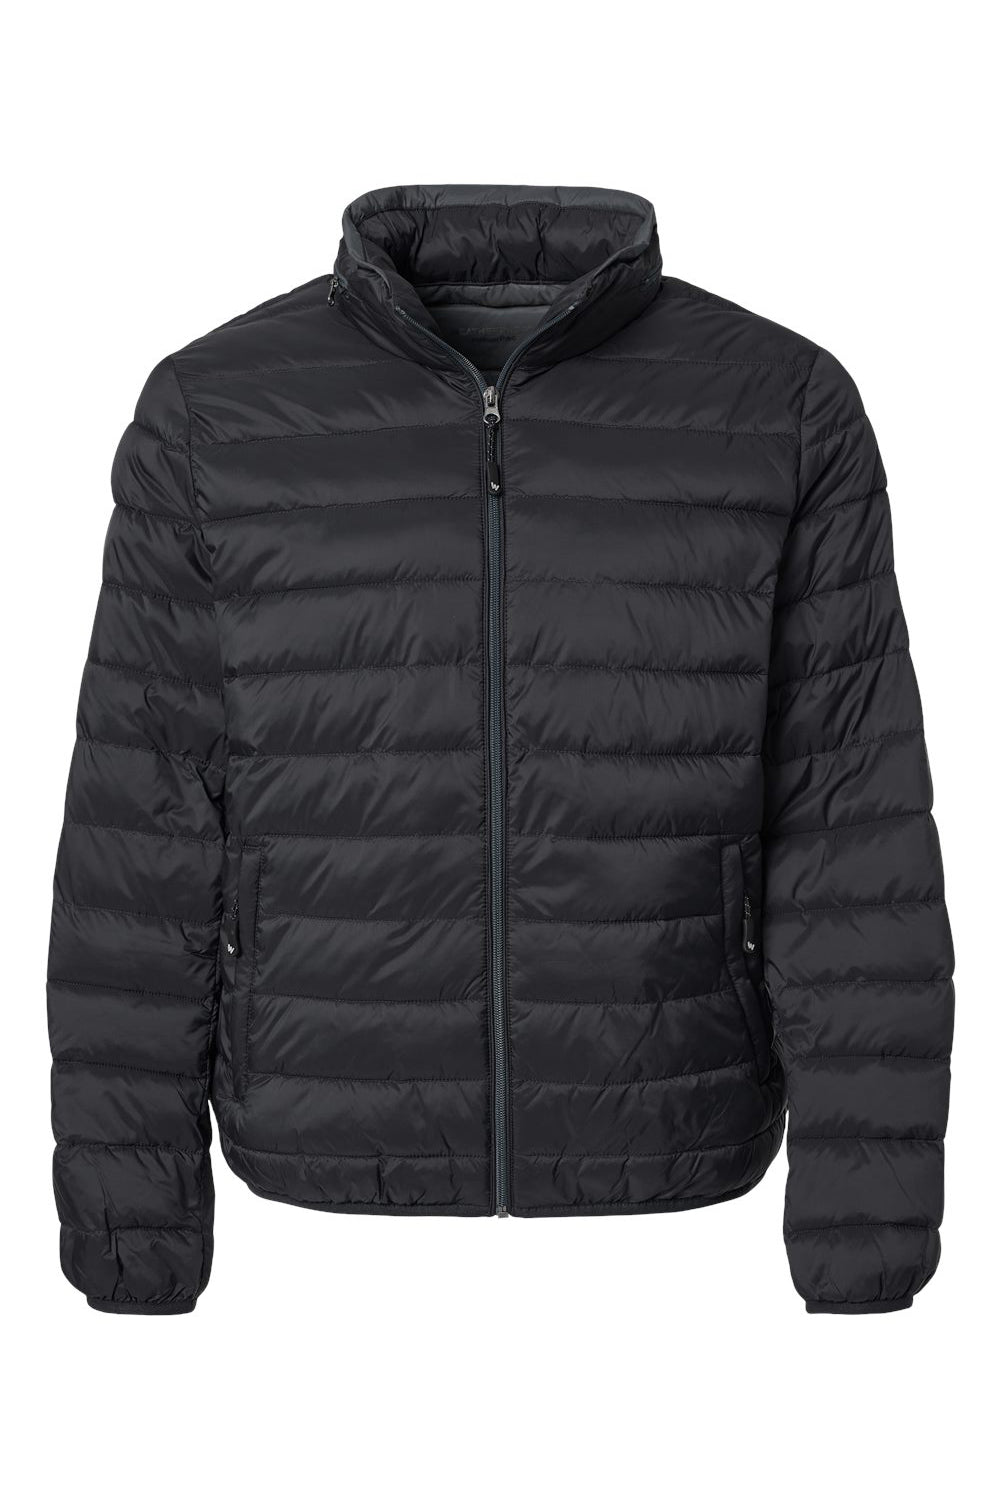 Weatherproof 211136 Mens PillowPac Full Zip Puffer Jacket Black Flat Front